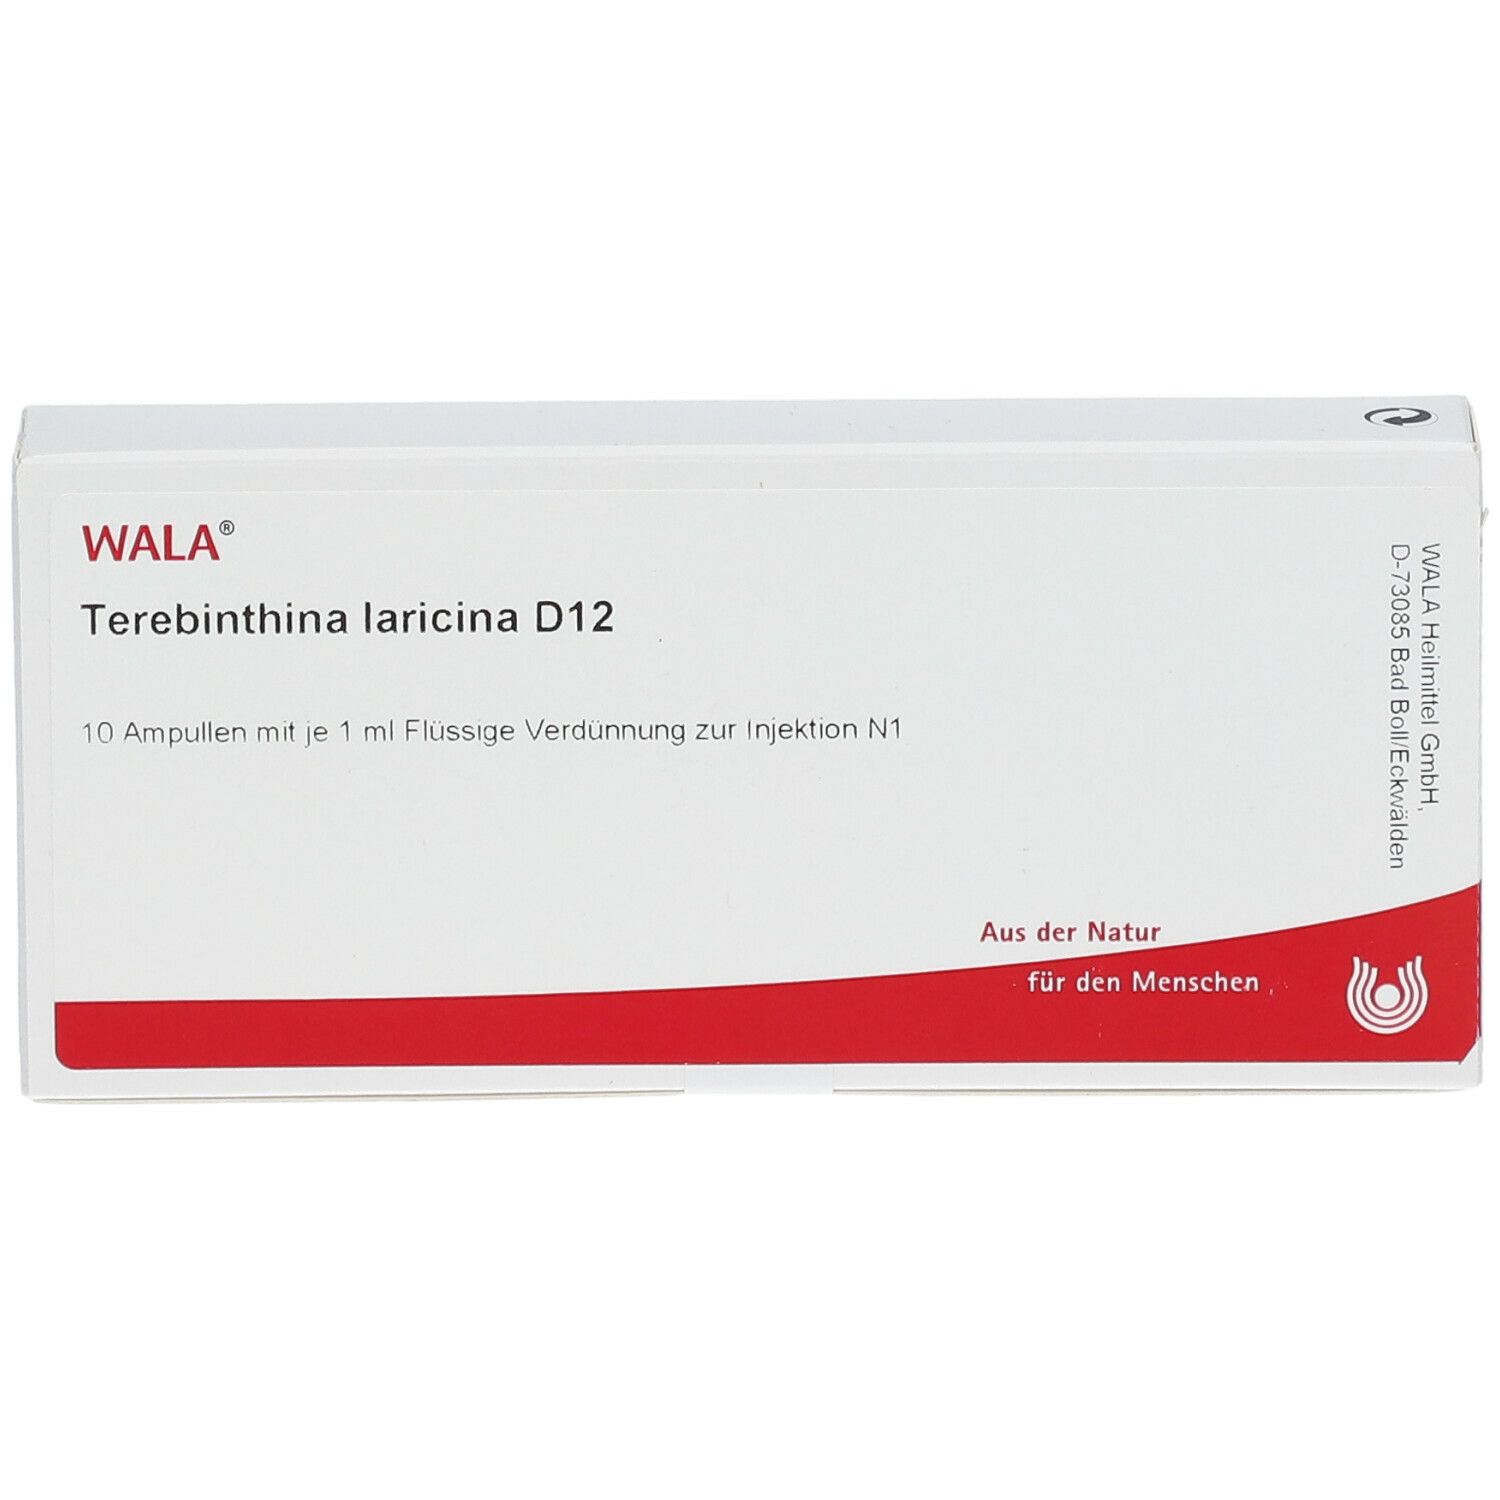 WALA® Terebinthina laricina D 12